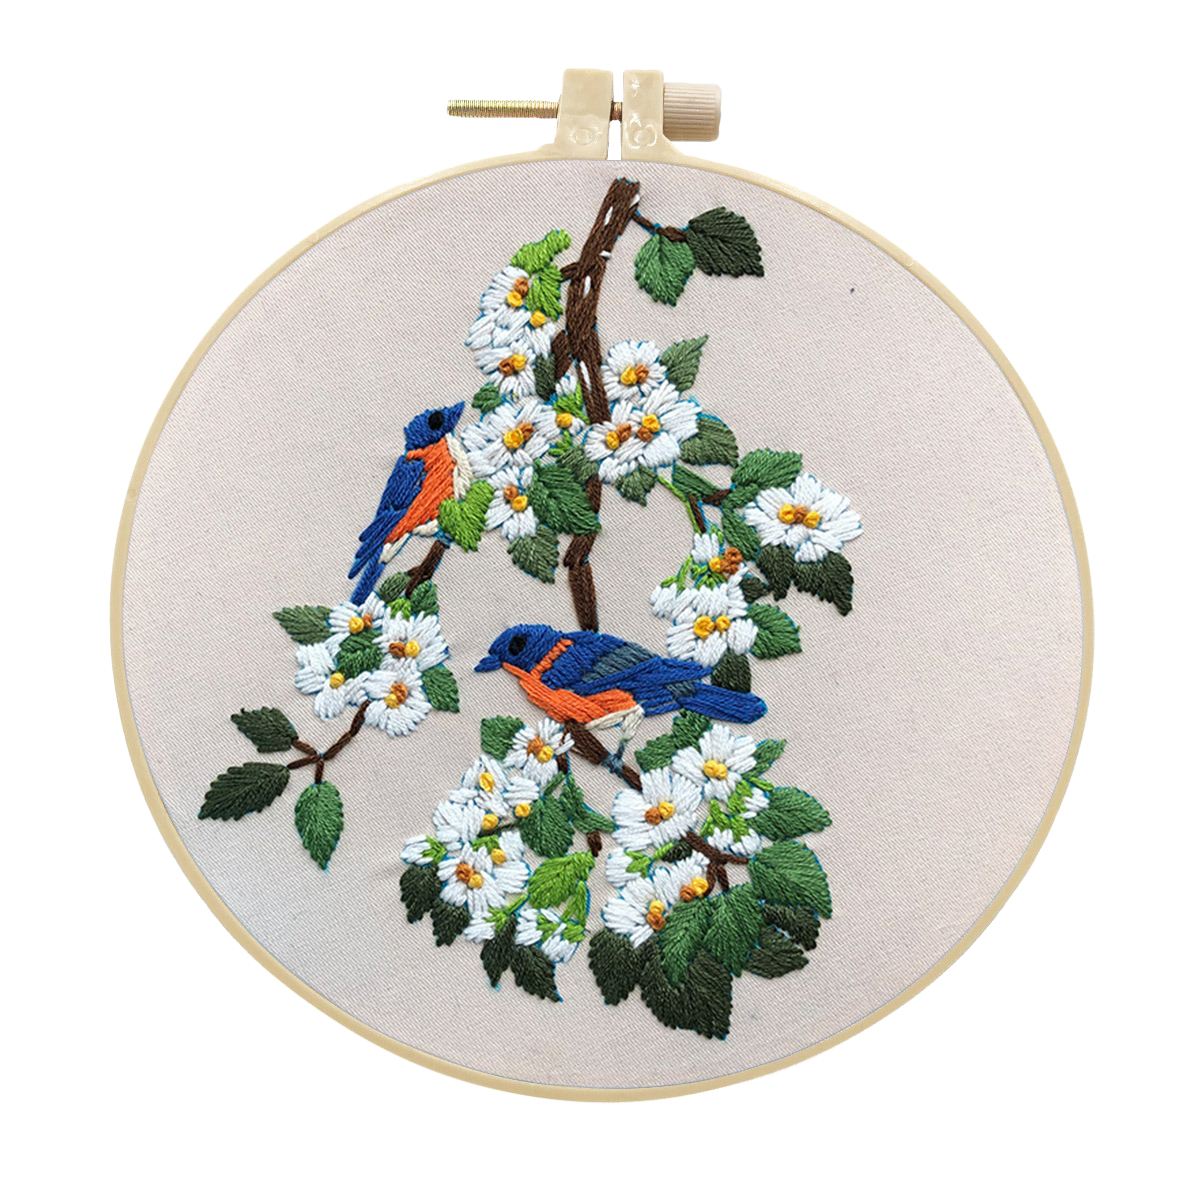 DIY Handmade Embroidery Kit Craft Cross Stitch Kits Beginner - Flower and Bird Bouquet Pattern